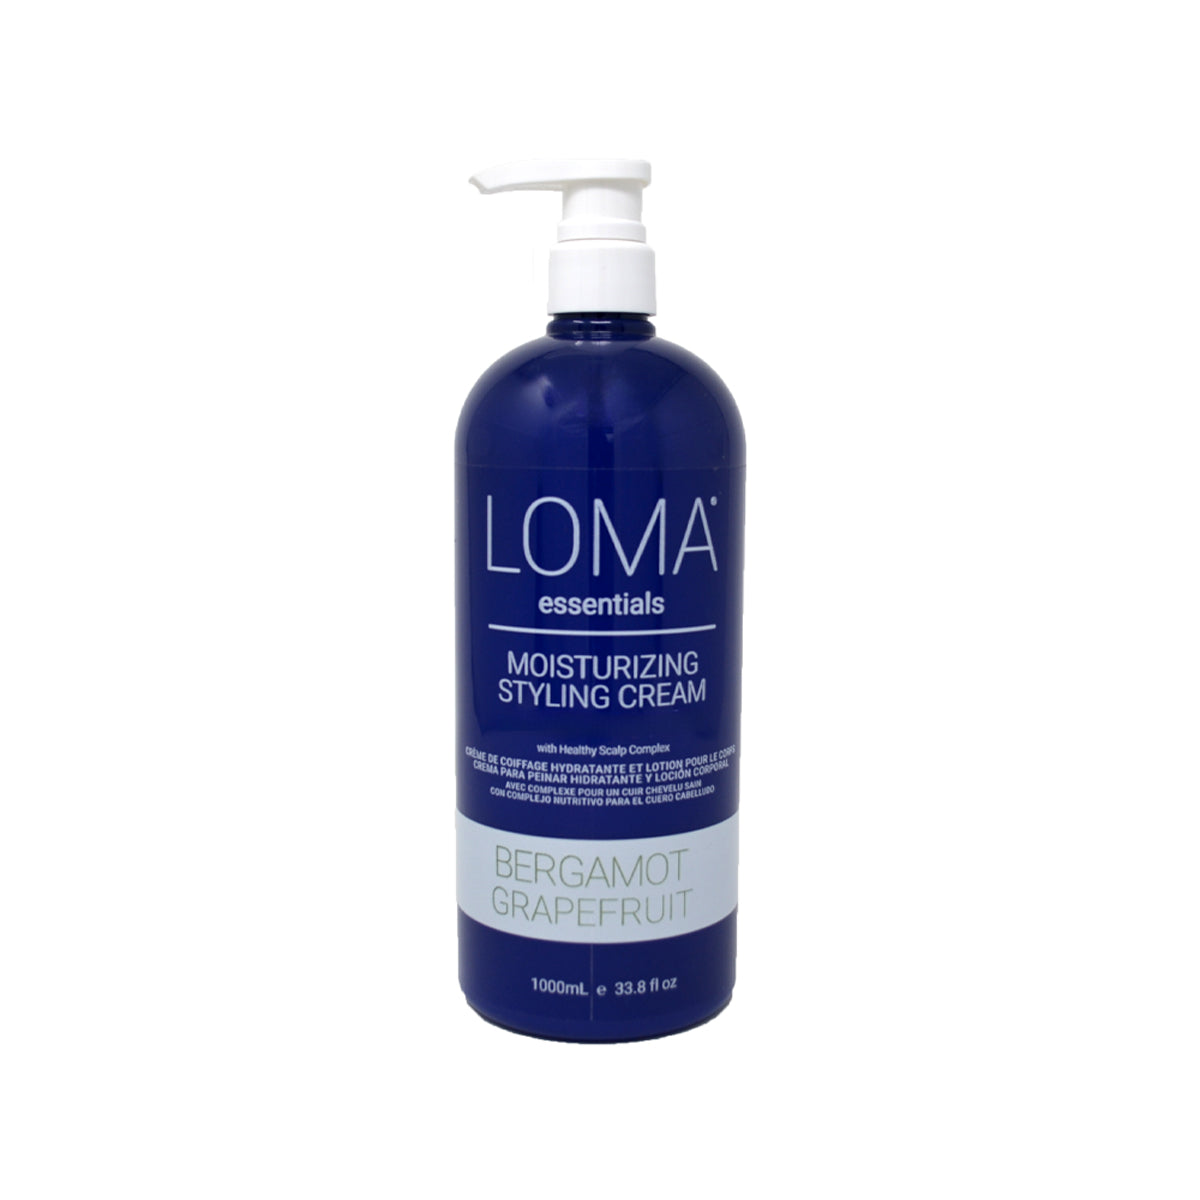 LOMA essentials Moisturizing Styling Cream